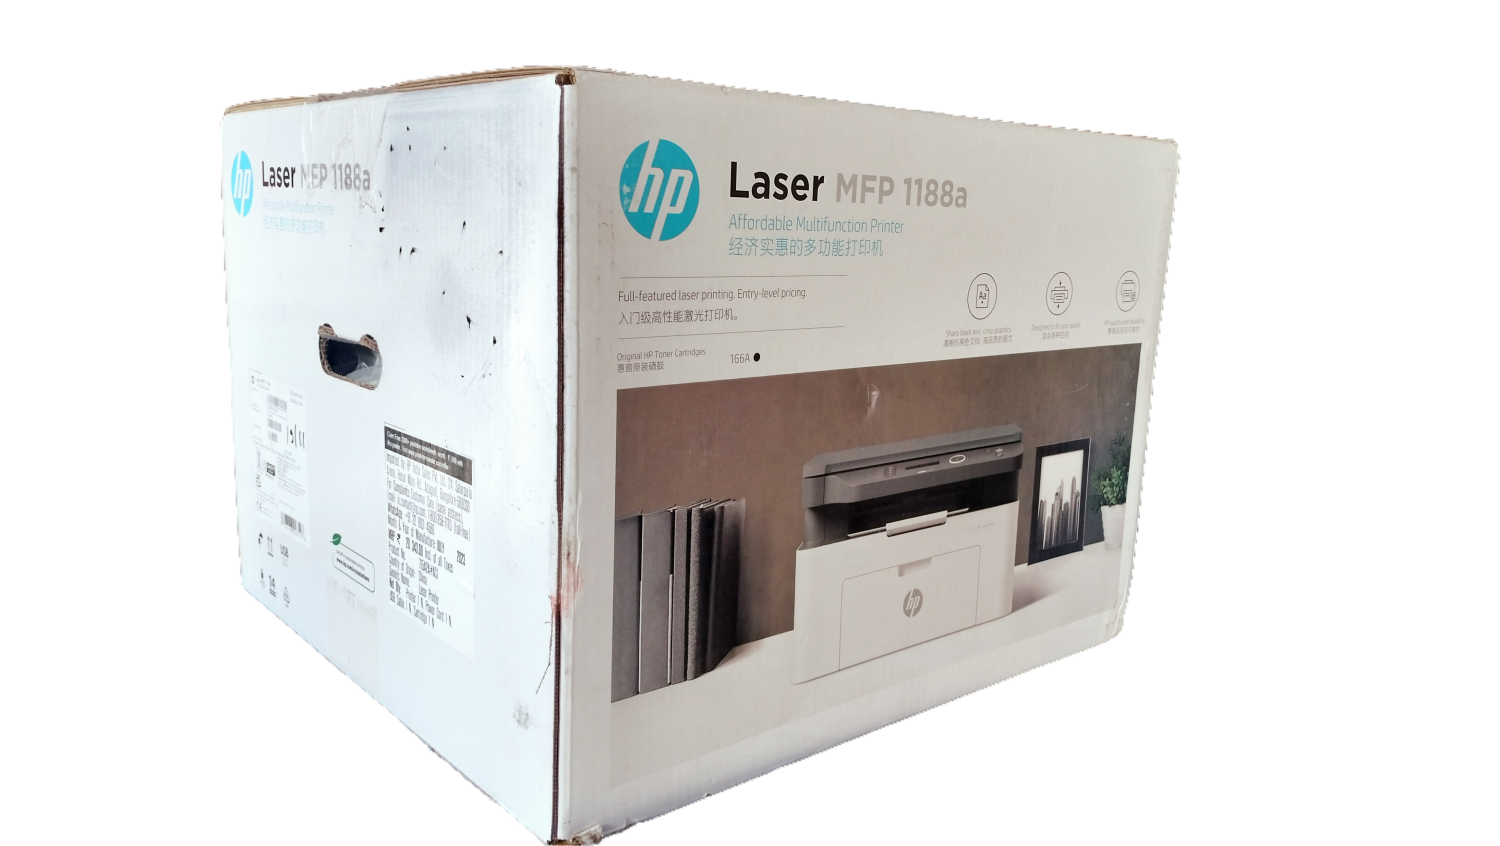 HP Laser MFP 1188a | Print, Copy, Scan